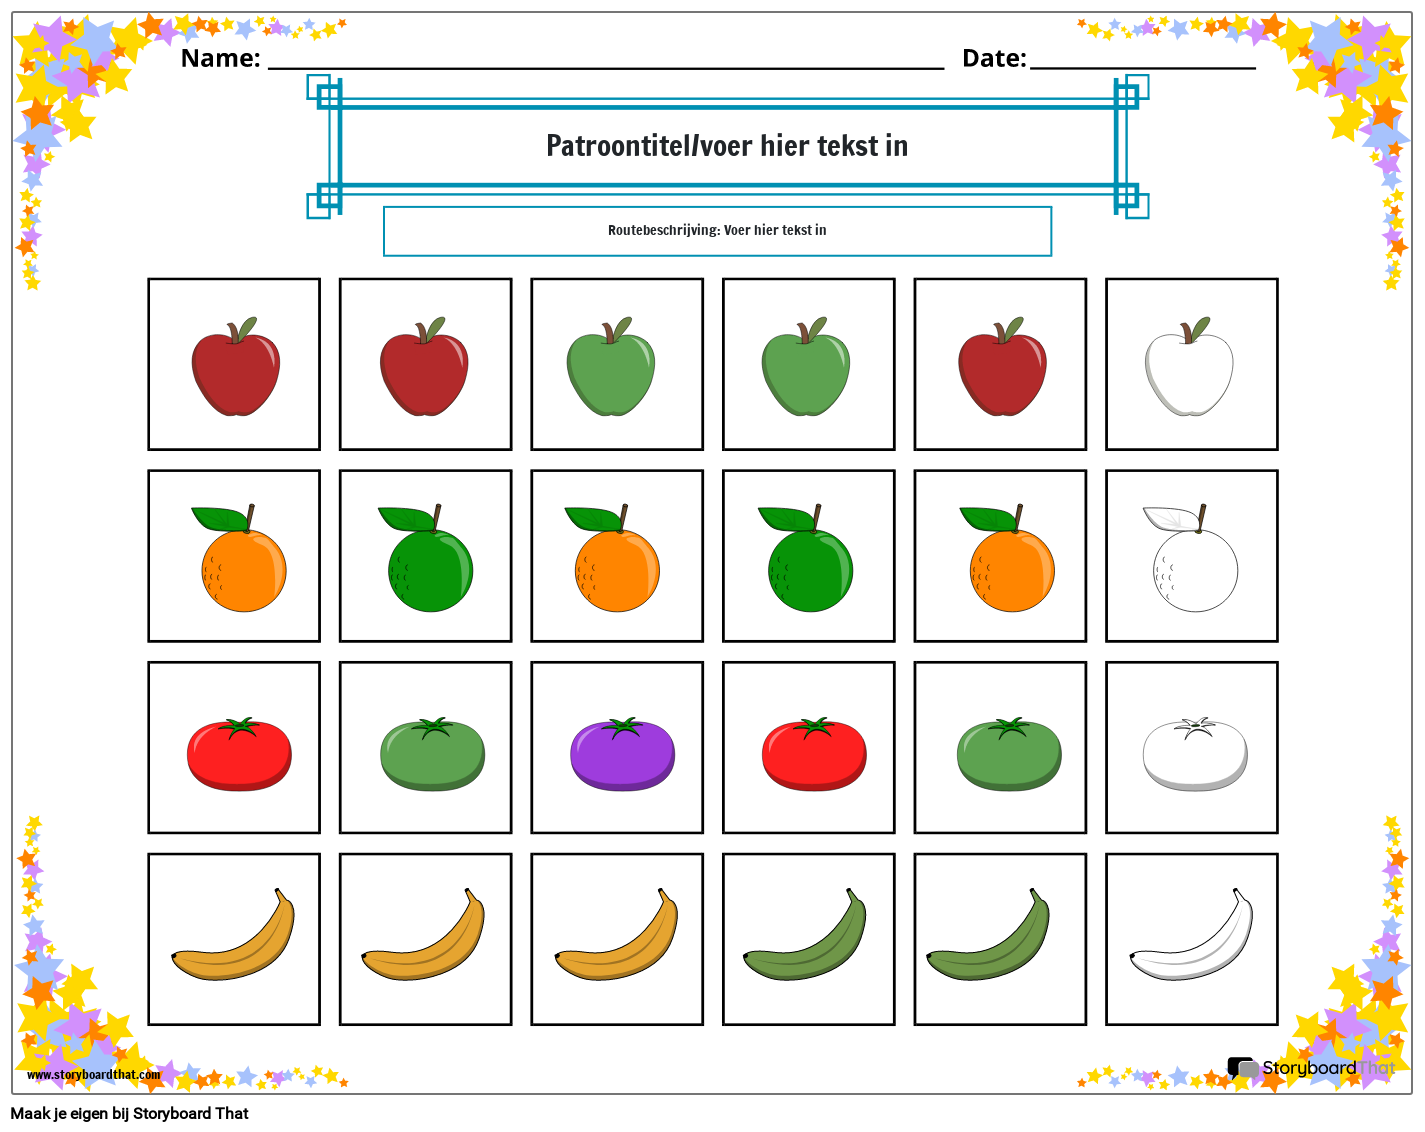 Fruit kleurenpatroon werkblad